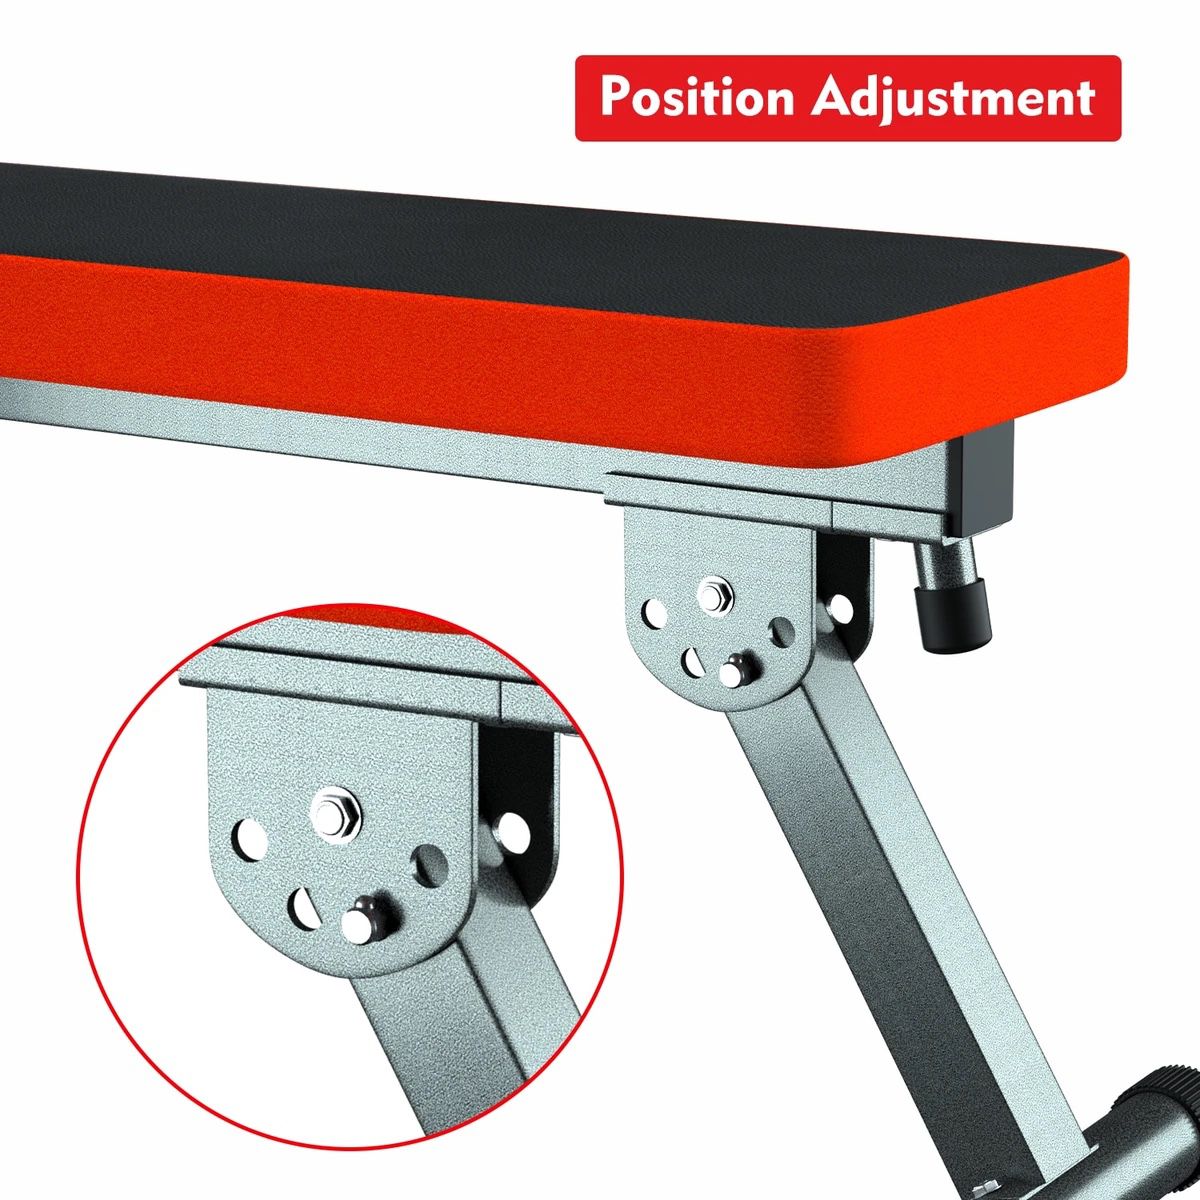 Adjustable Folding Weight Bench Press Rack